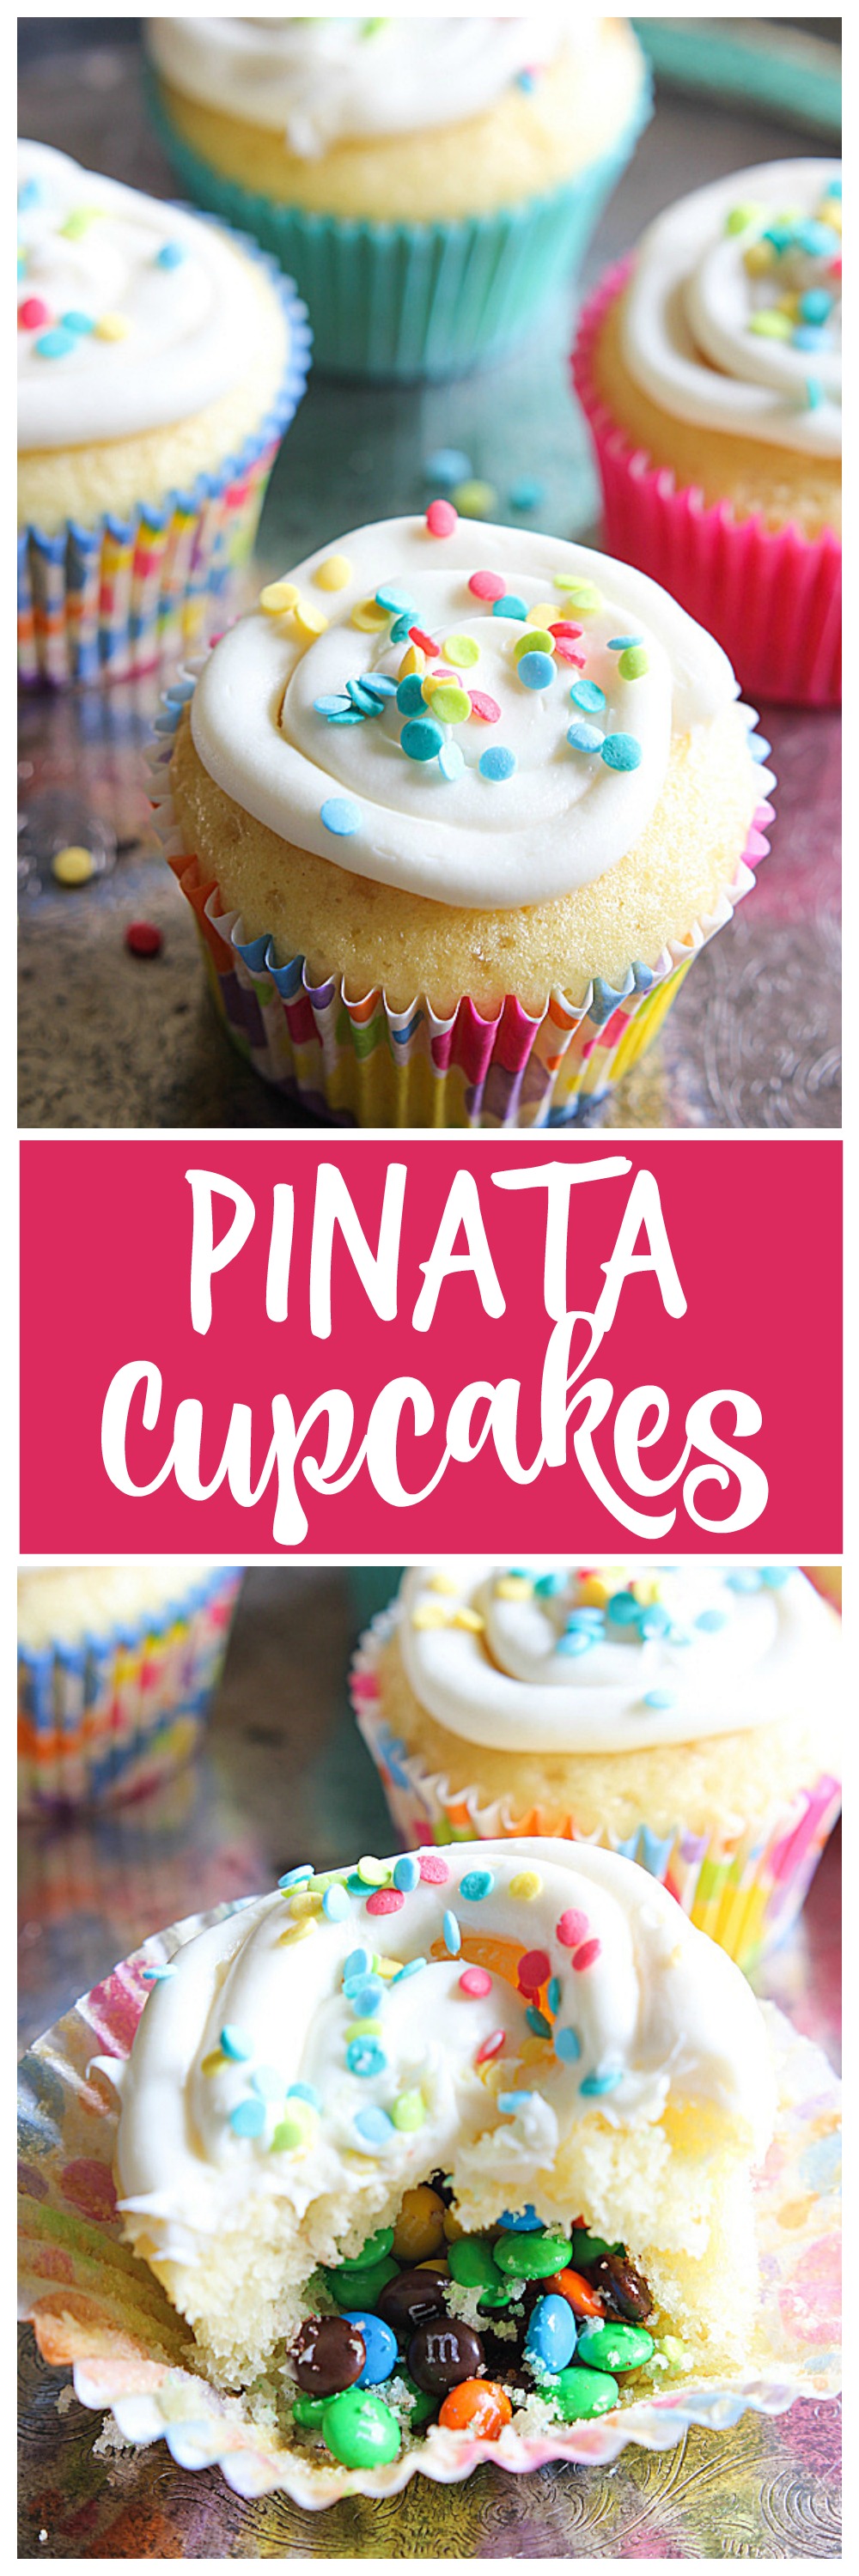 Pinata Cupcakes | Mandy's Recipe Box